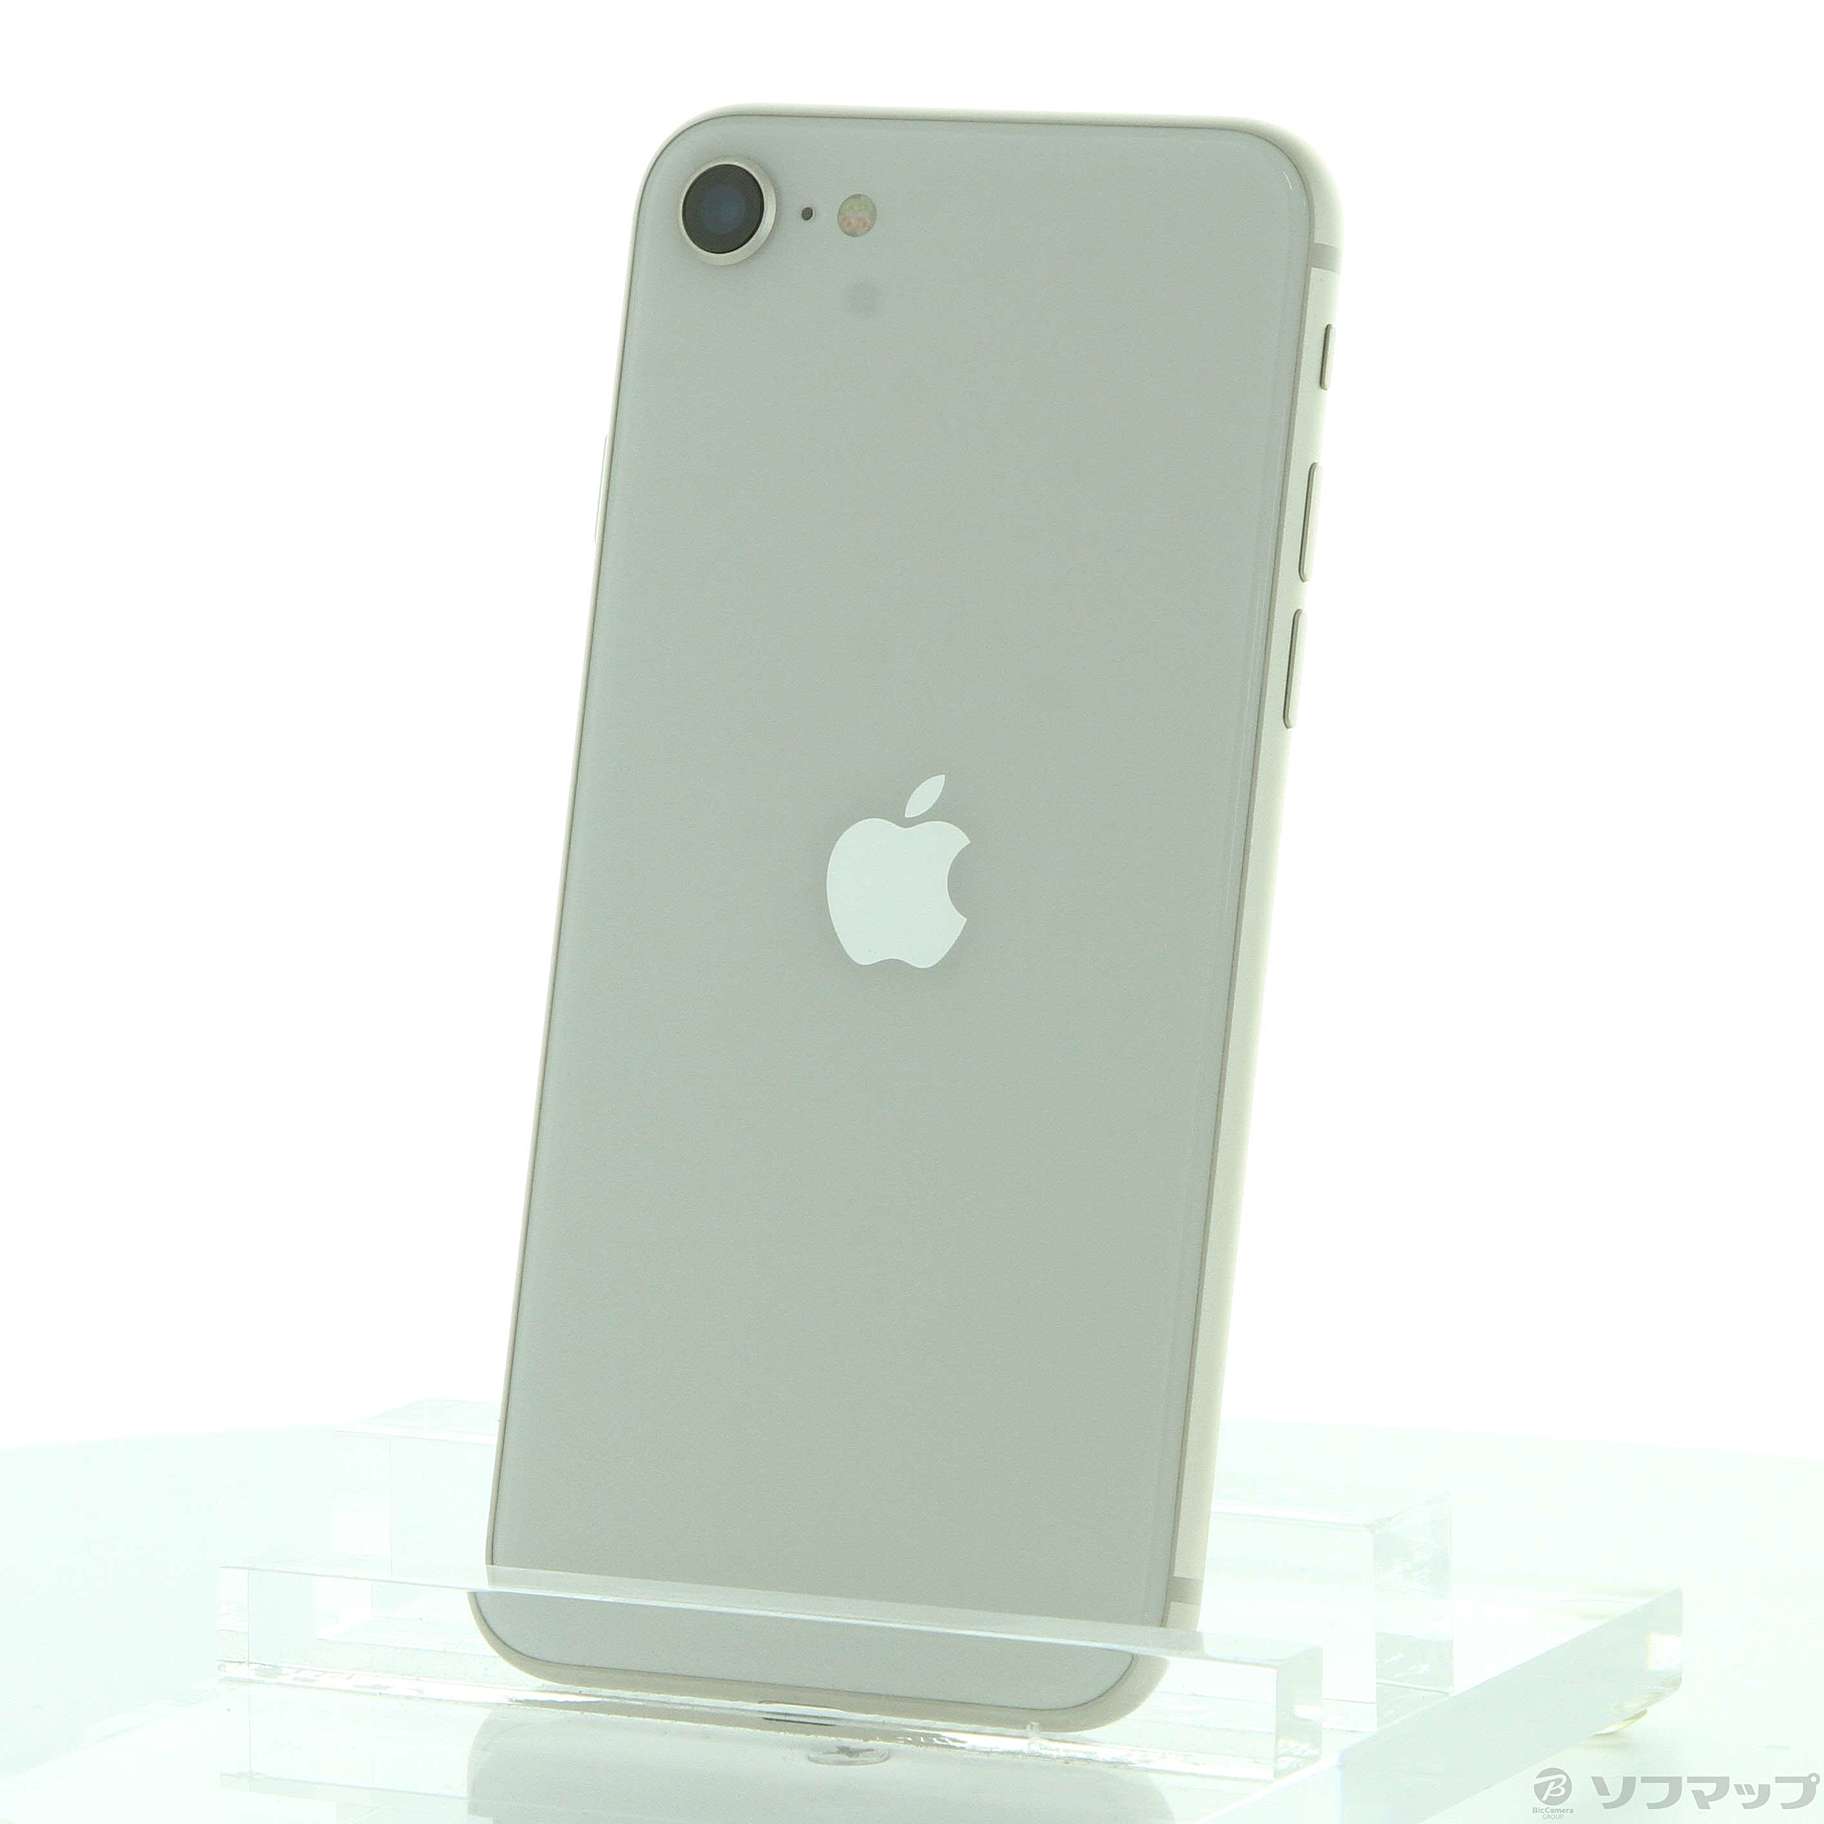 iPhone SE (第3世代) Starlight 128GB SIMフリー - スマートフォン本体